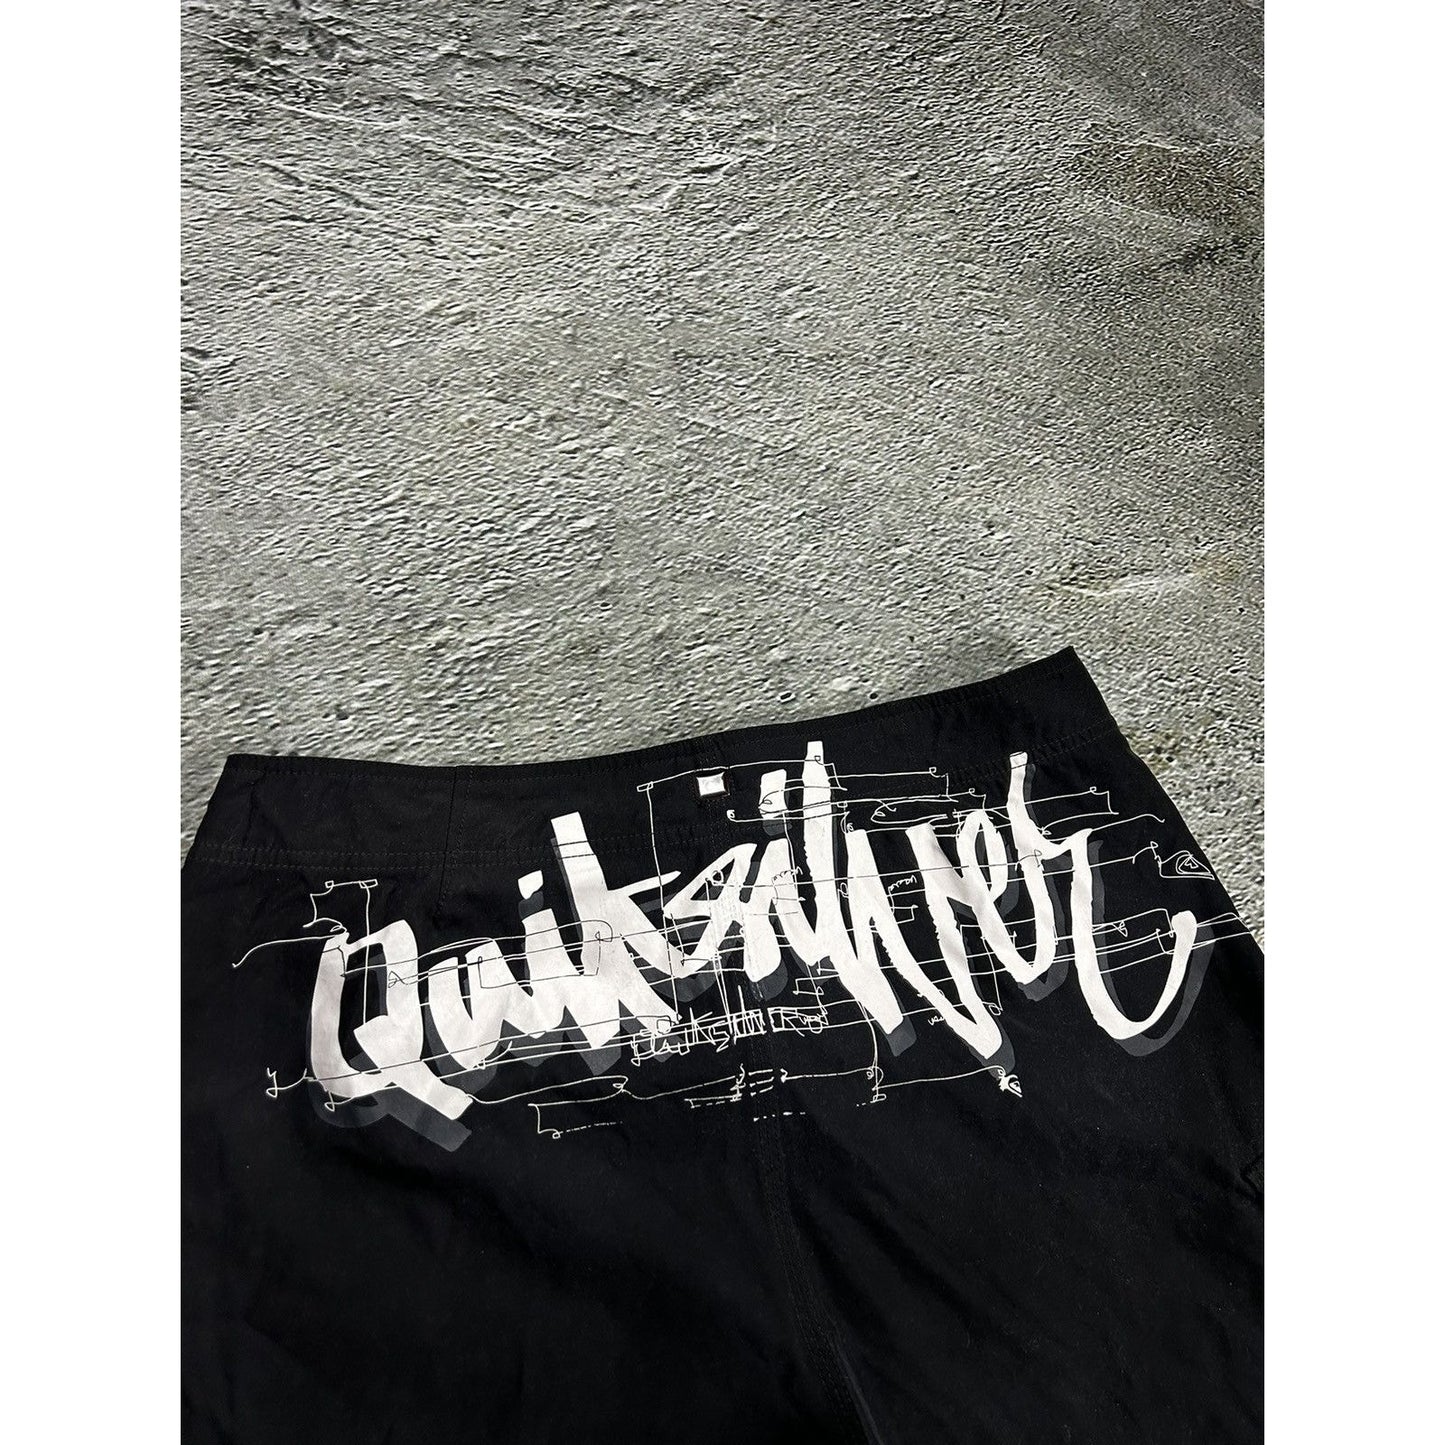 Quiksilver shorts black Y2K vintage fullprint graffiti surf